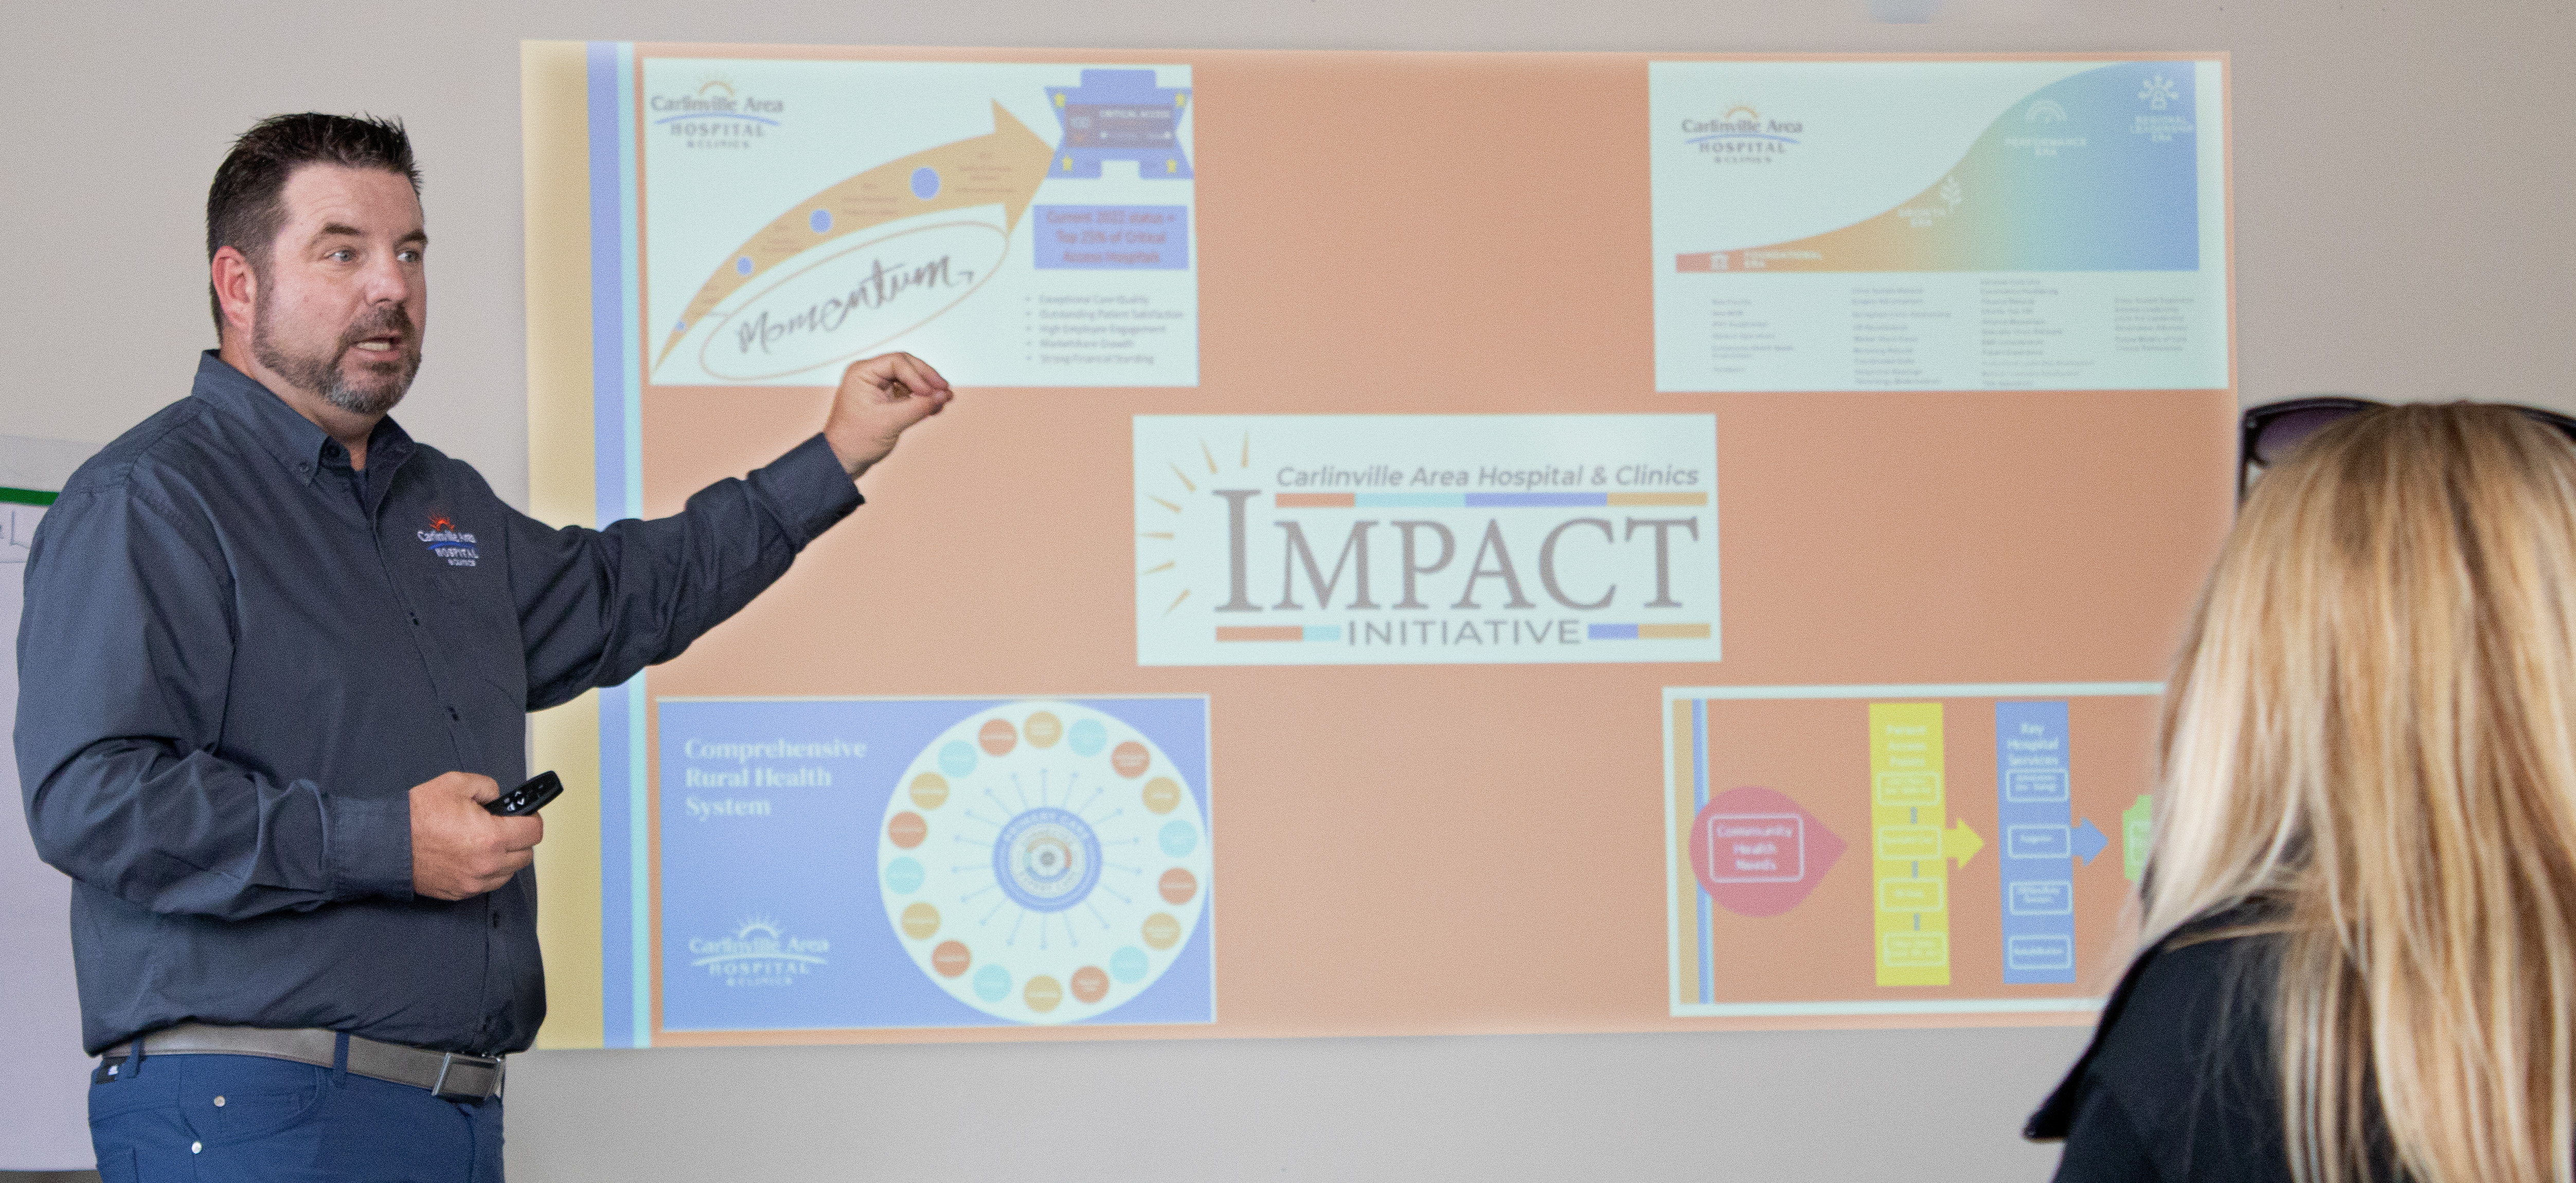 Man giving a presentation explaining the Impact Initiative